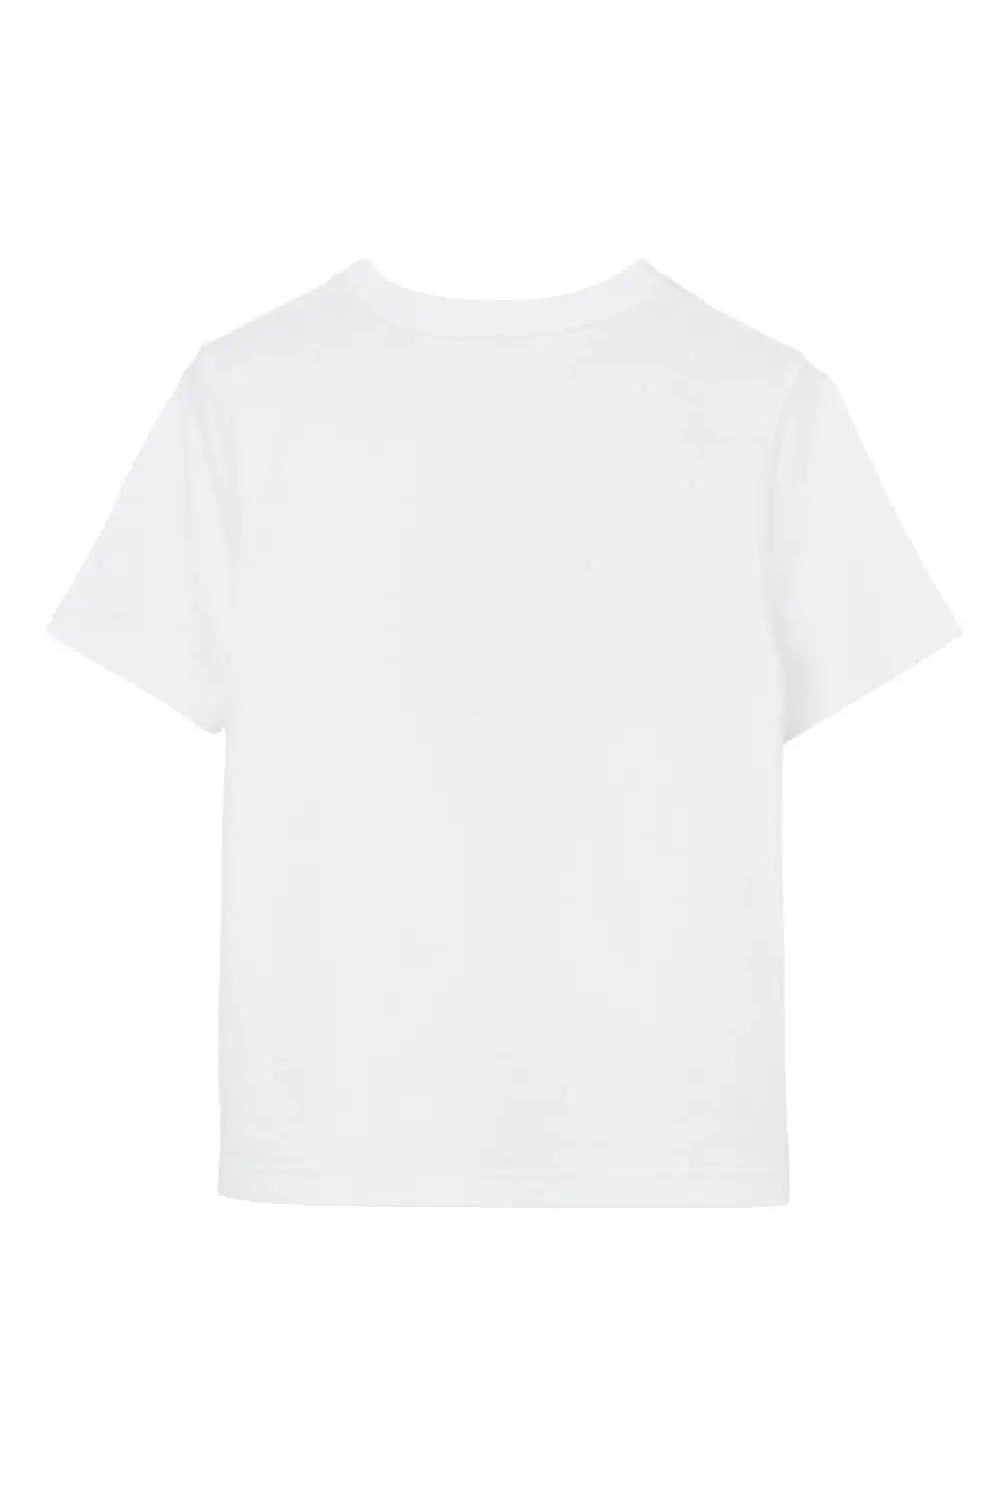 ​Thomas Bear Print Cotton T-shirt for Girls - Maison7